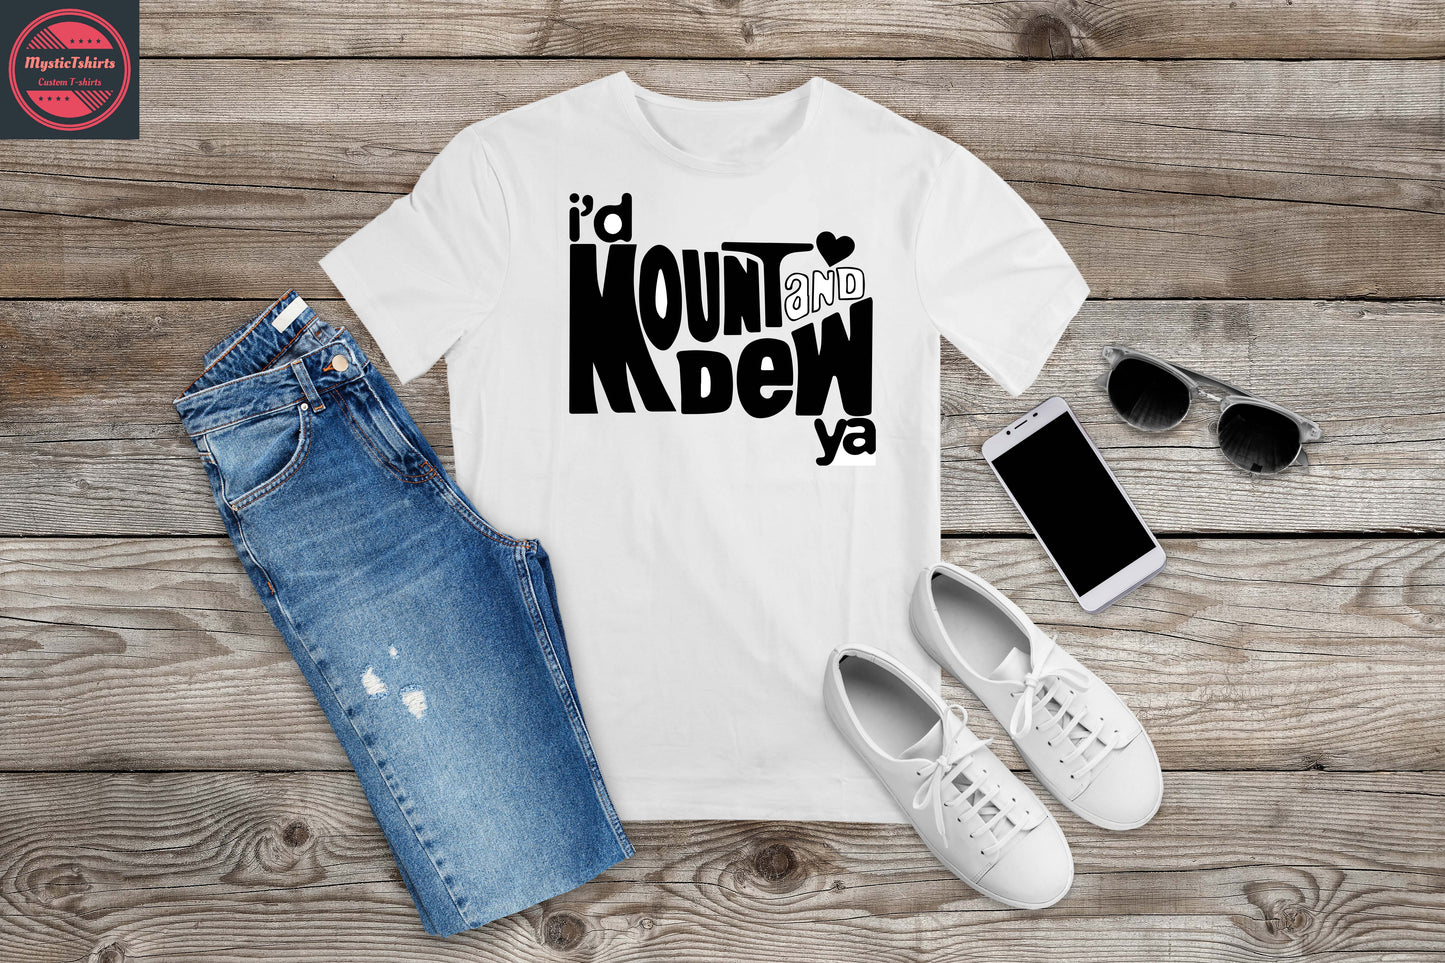 227. I'D MOUNT AND DEW YA, Custom Made Shirt, Personalized T-Shirt, Custom Text, Make Your Own Shirt, Custom Tee